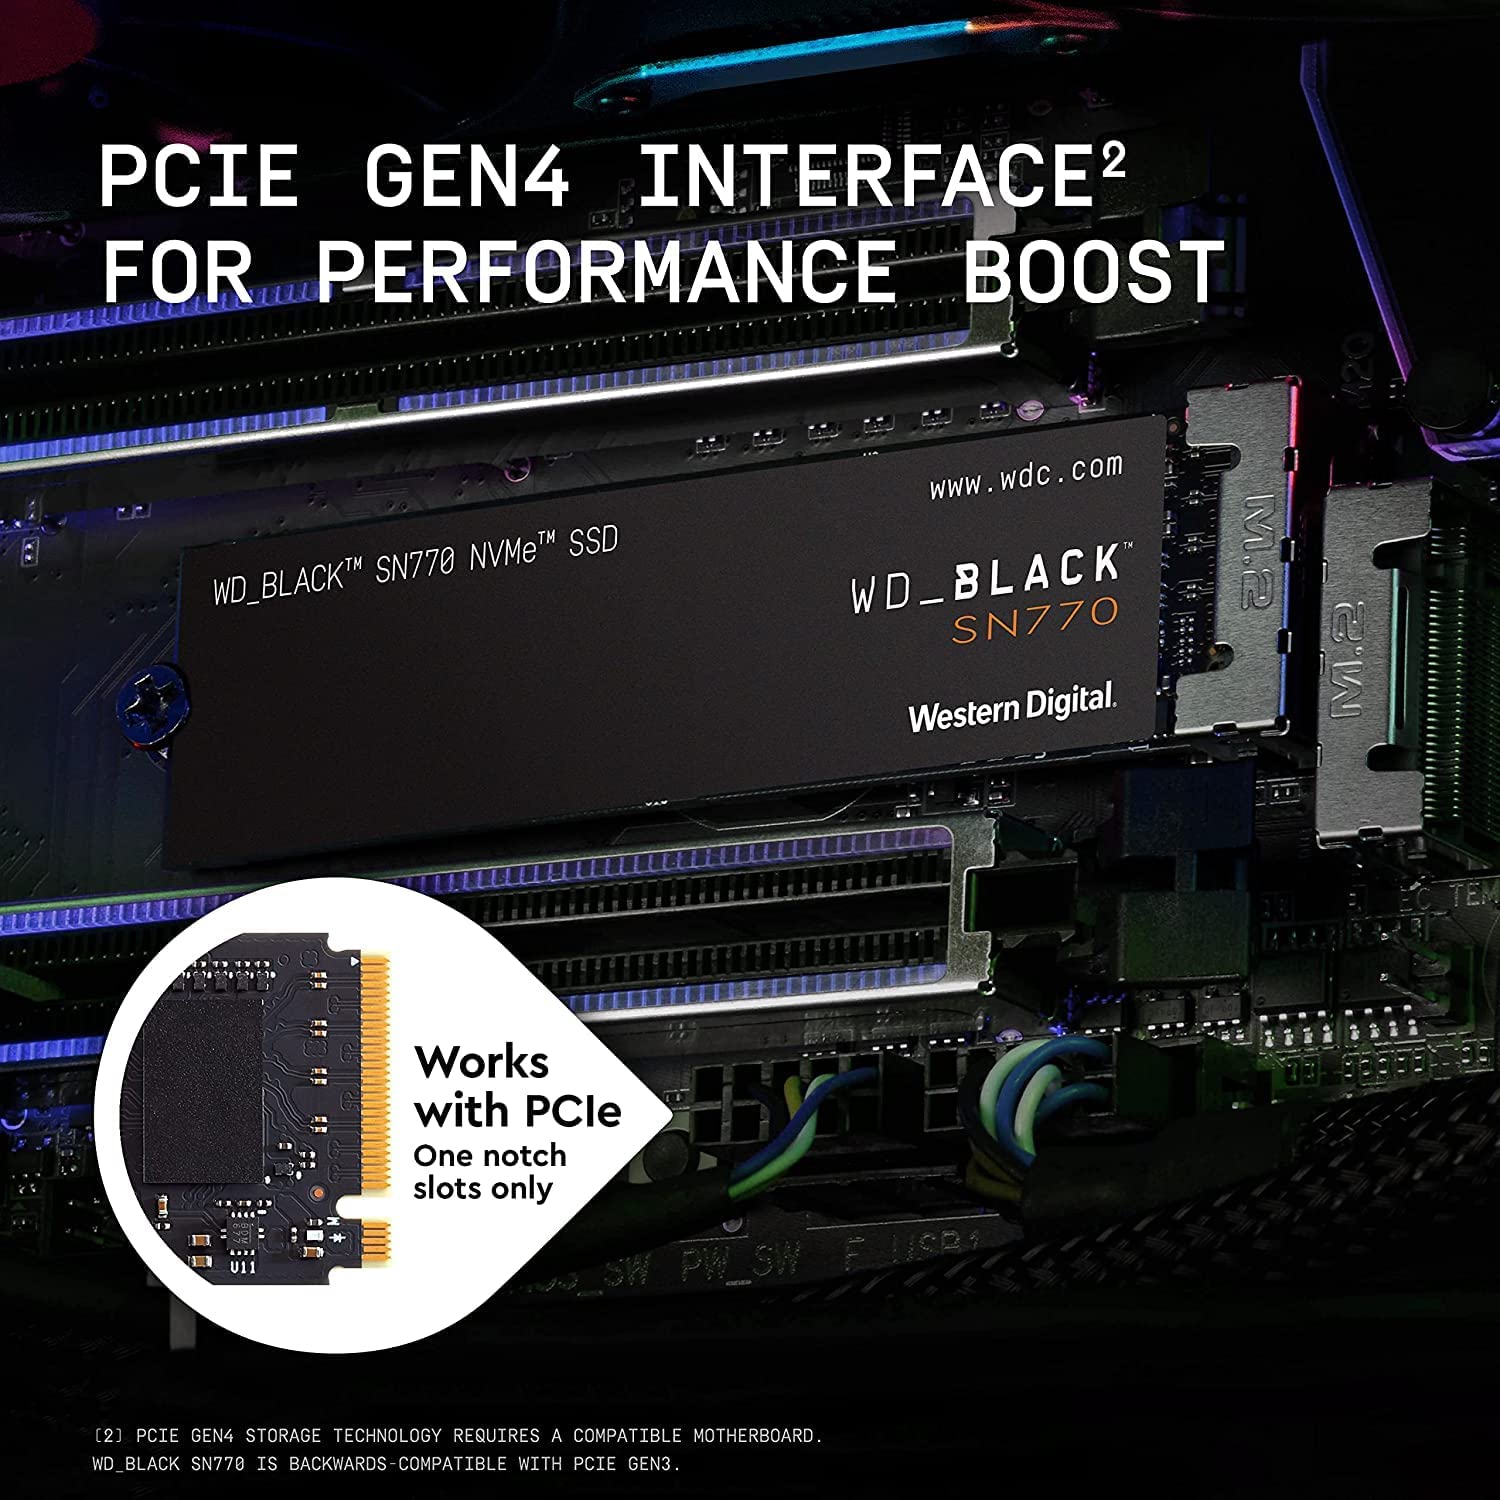 WESTERN DIGITAL WD BLACK SN770 M.2 500GB PCIE GEN4 SOLID STATE DRIVE